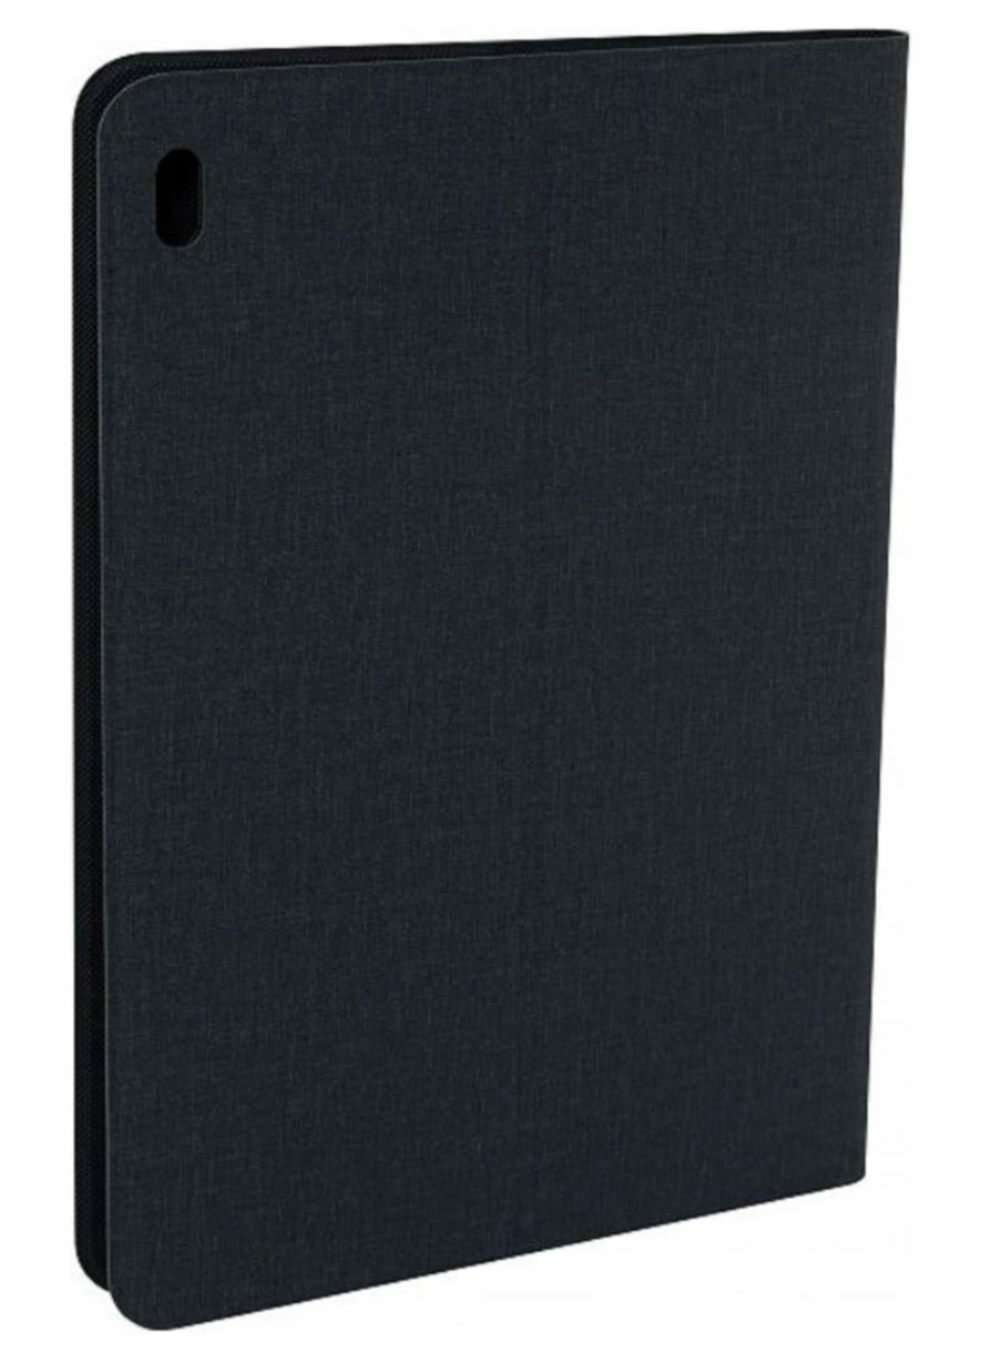 Lenovo Tab E10 Folio Tablet Case Review